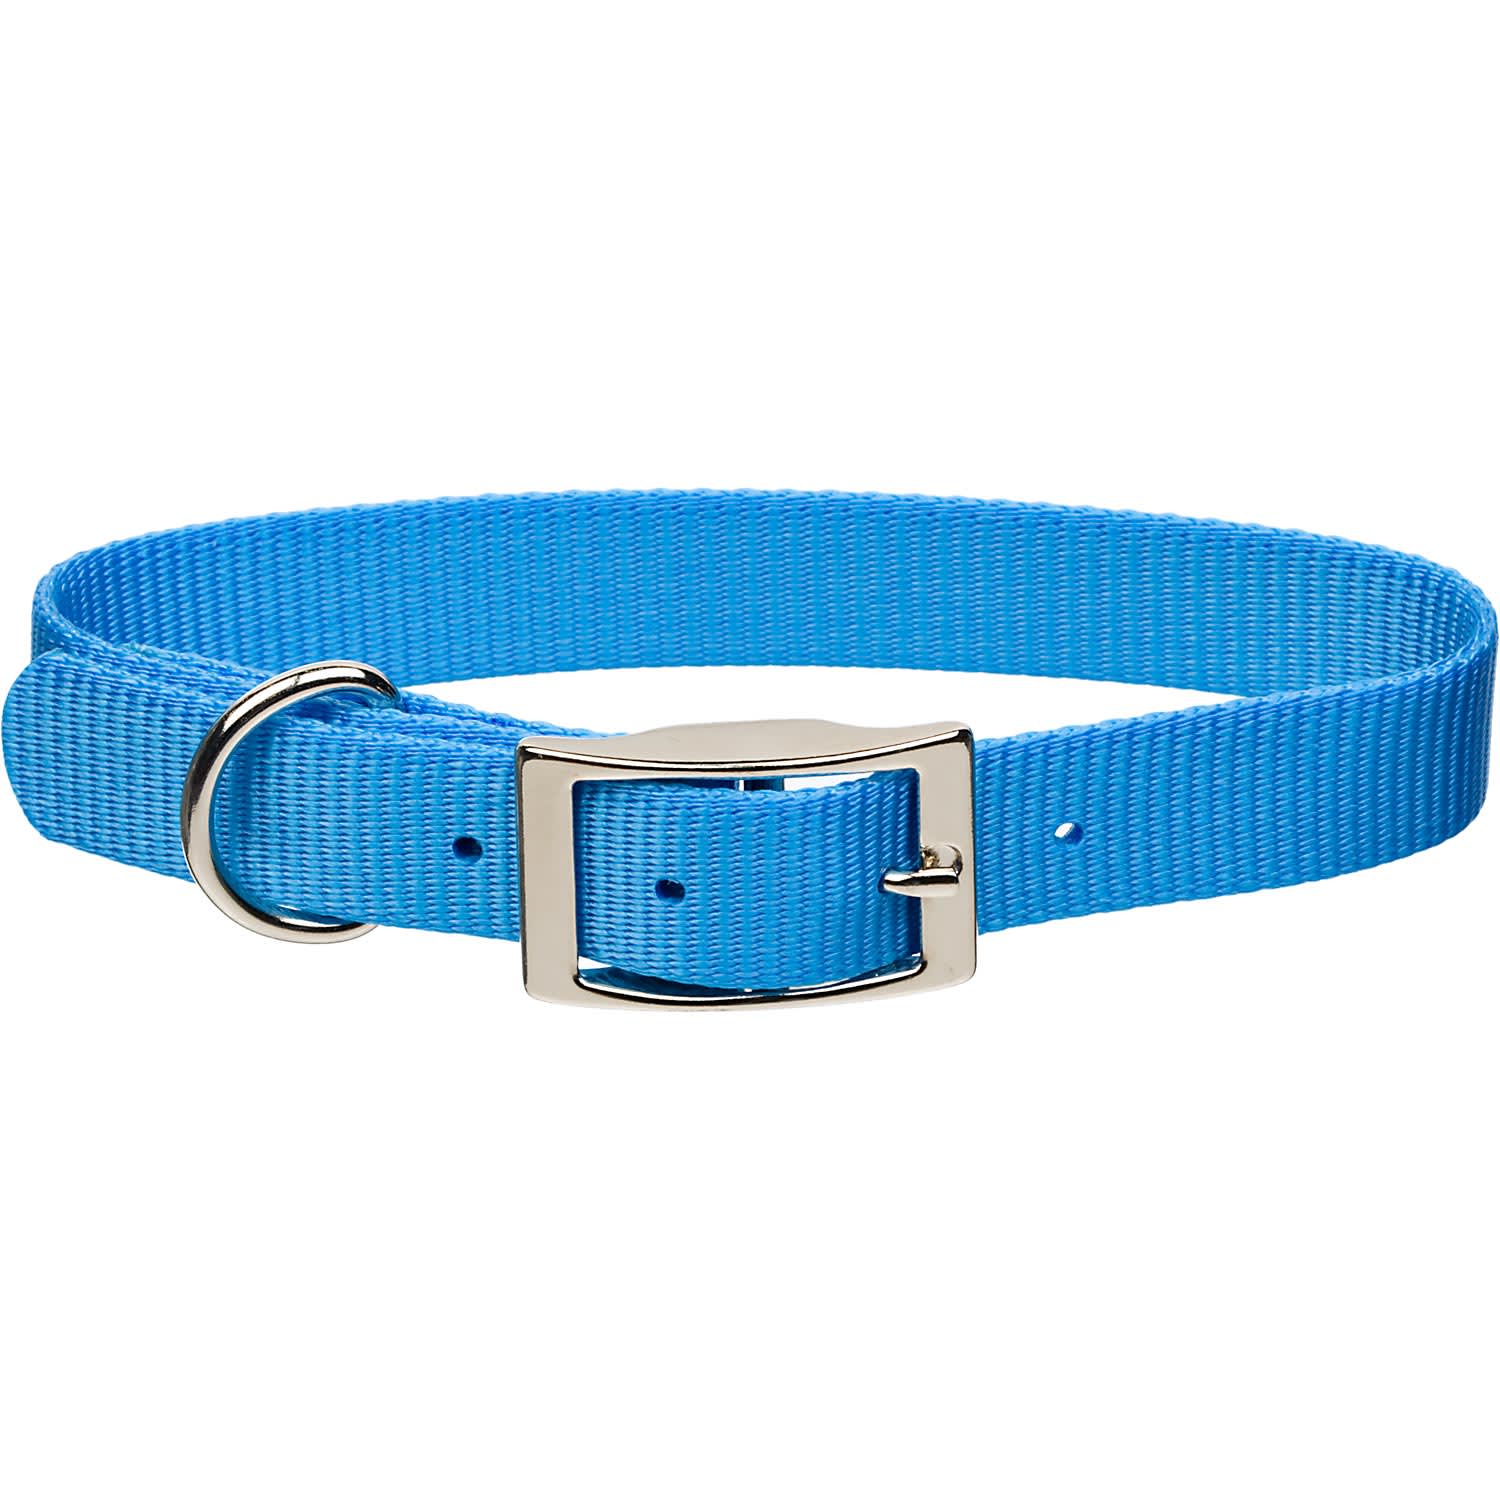 Coastal Pet Metal Buckle Nylon Personalized Dog Collar in Light Blue, 5/8 Width